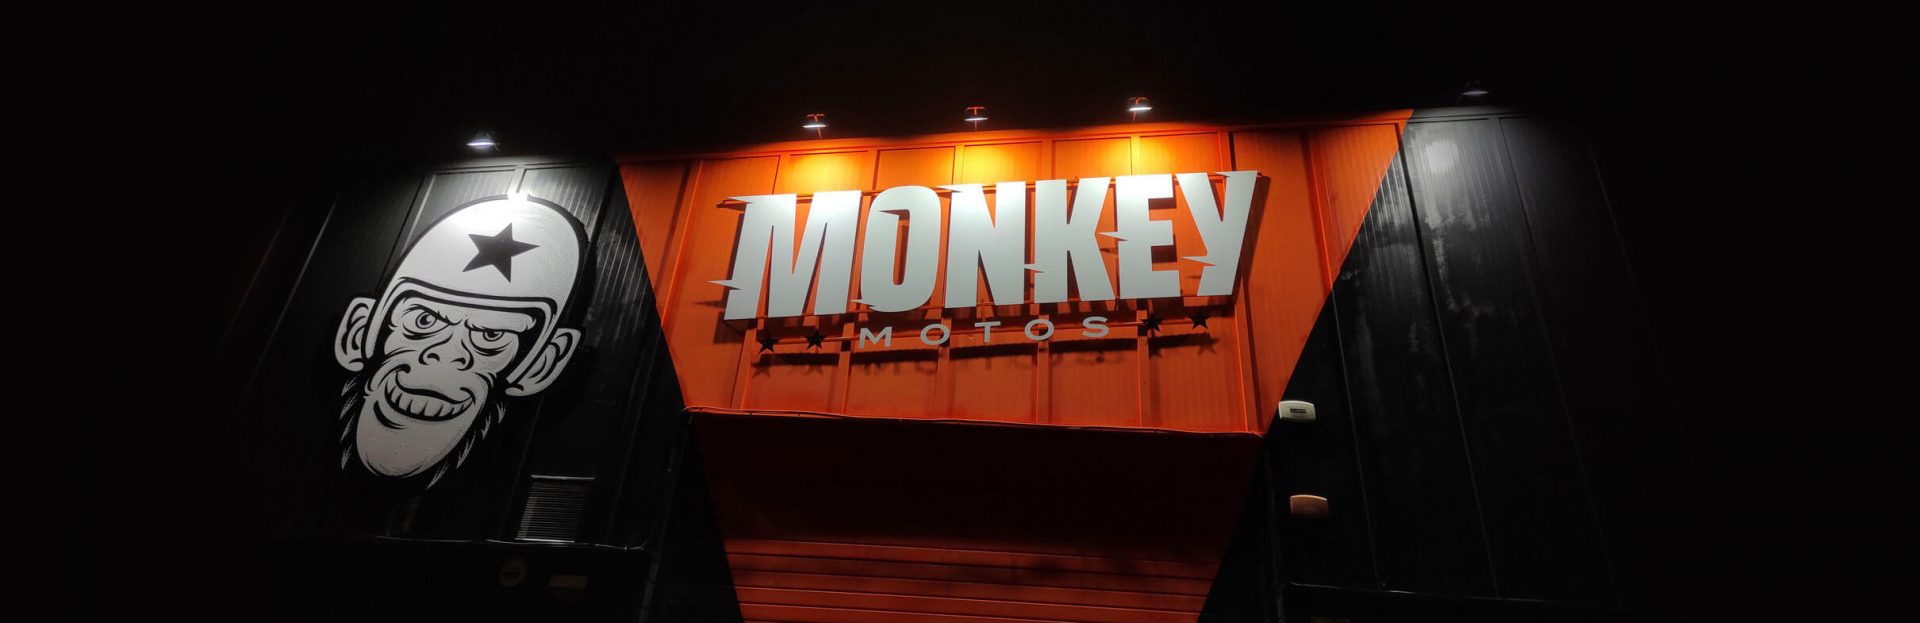 Monkey Motos Pamplona